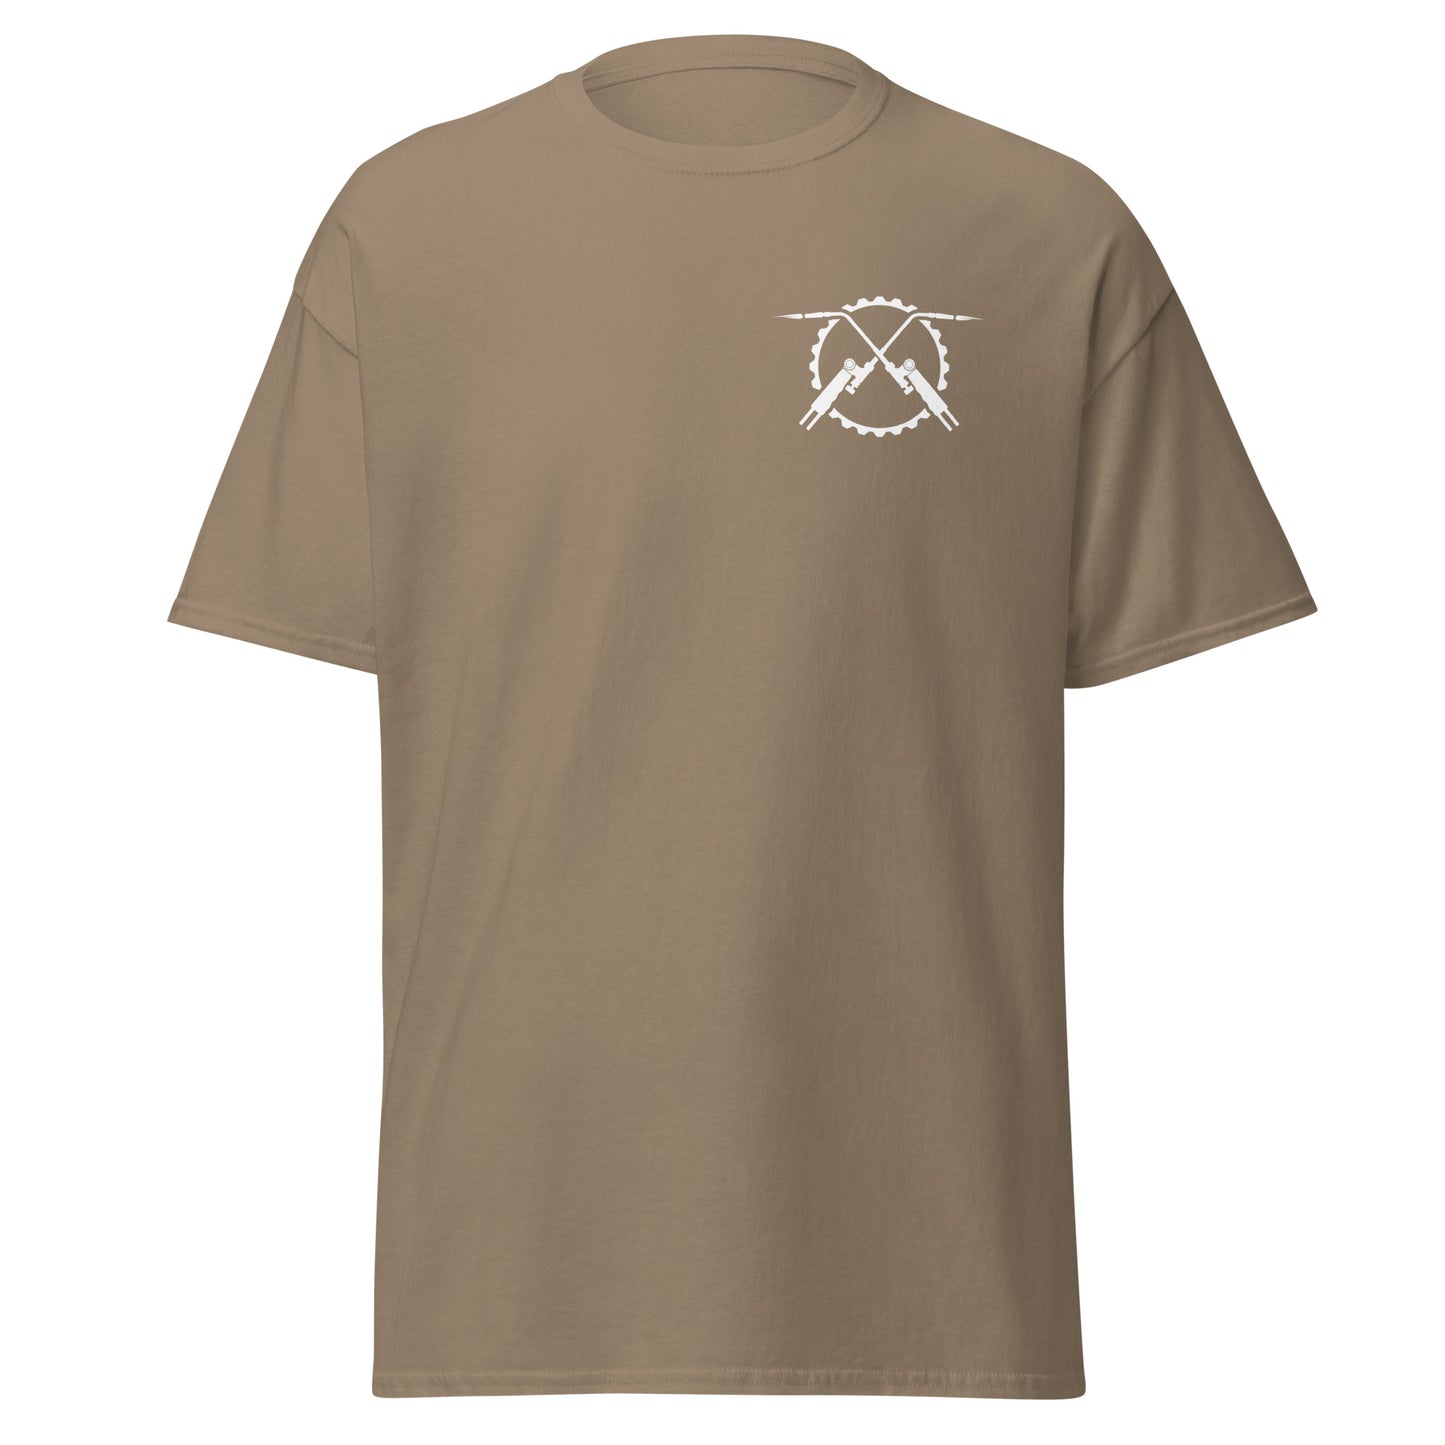 The Revenant T-shirt